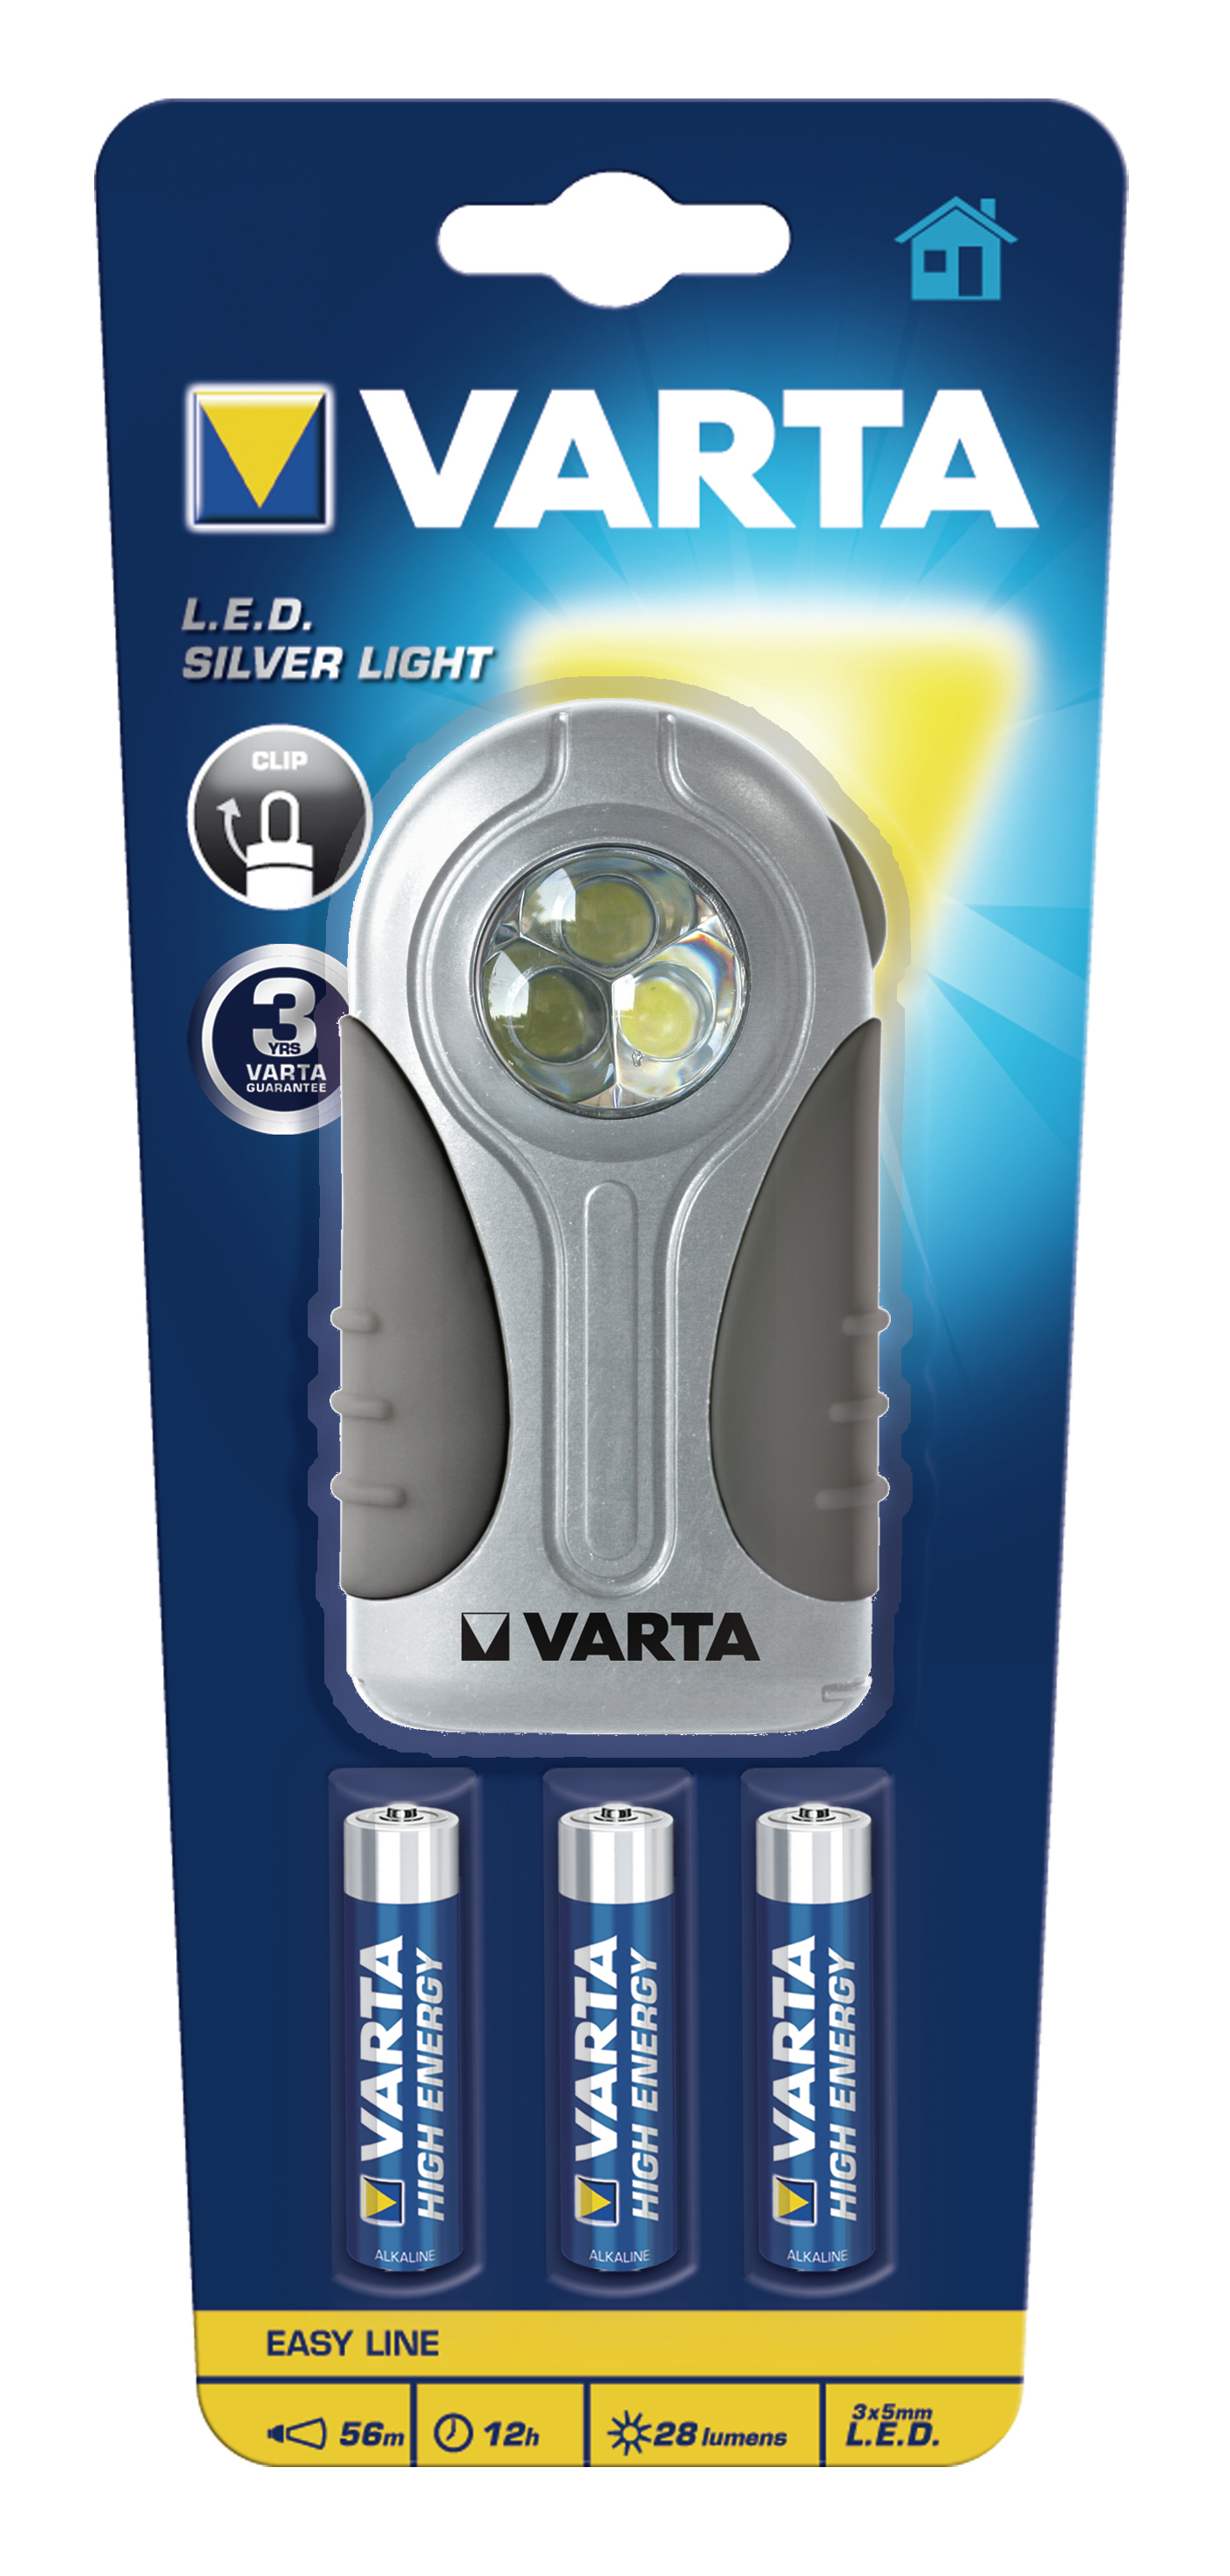 Varta LED Silver Light 3AAA - Universal-Taschenlampe - Kunststoff - Kautschuk - 3 Lampen - 28 lm - 56 m - LED